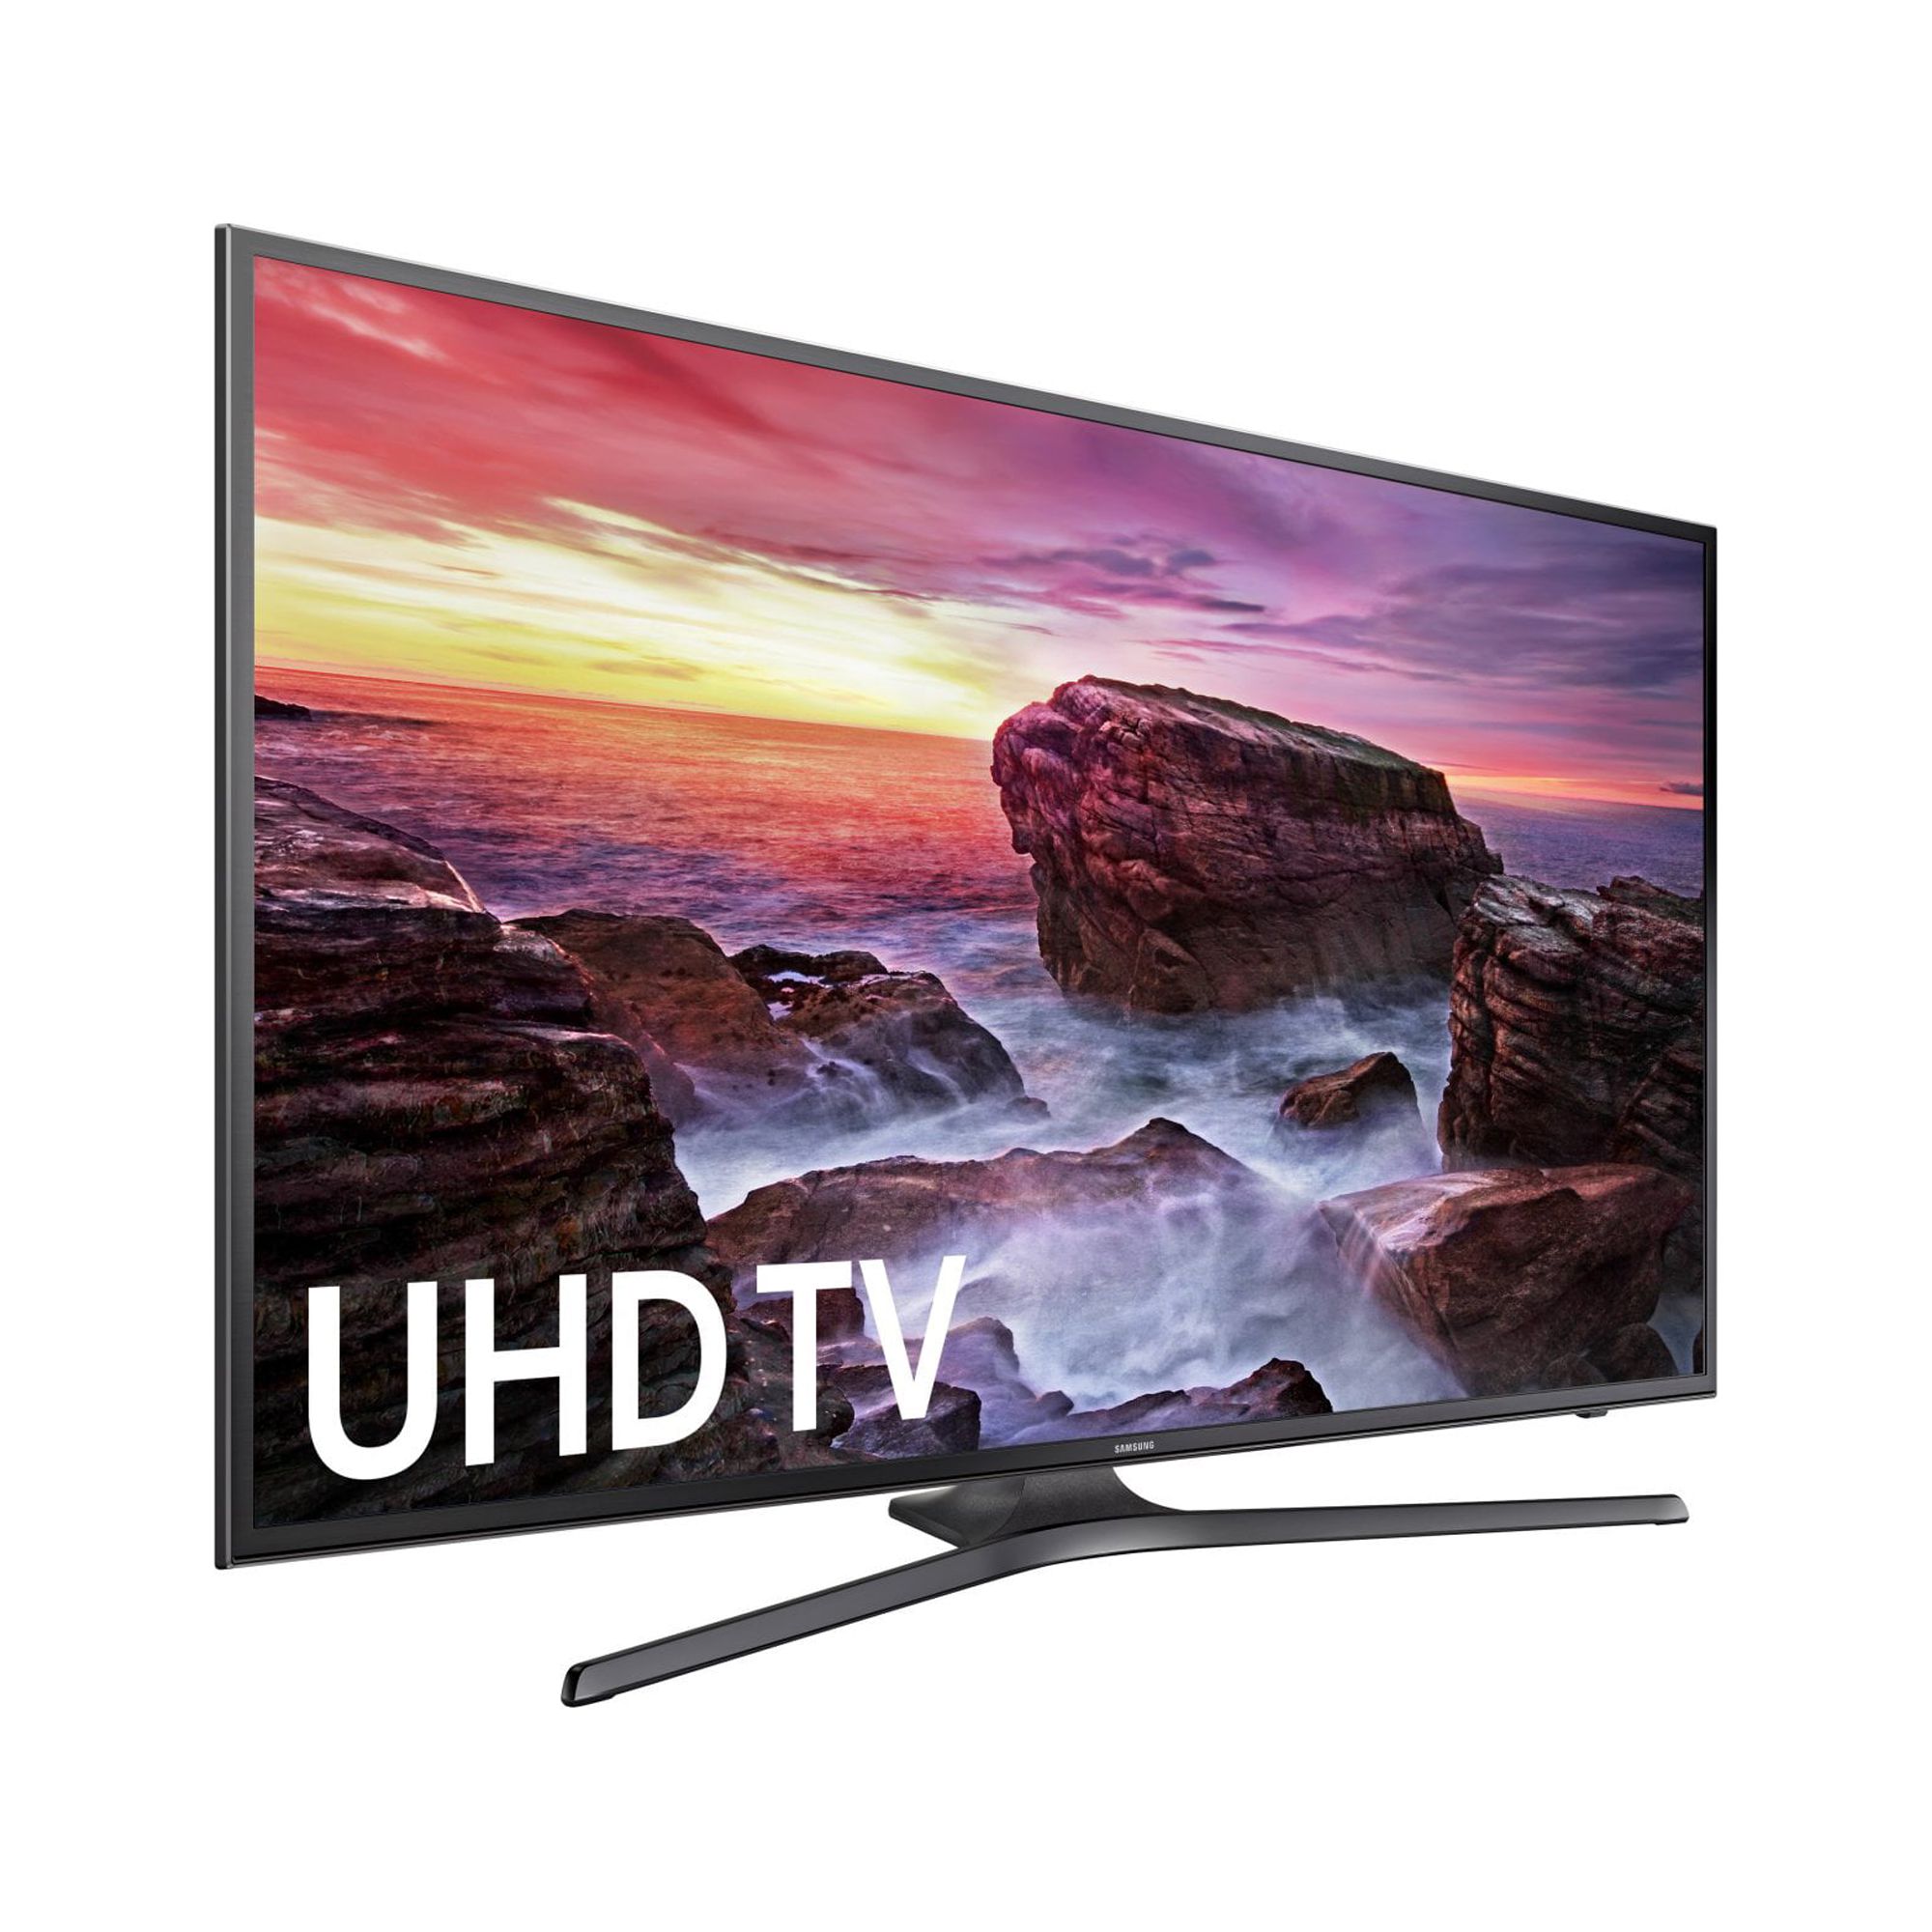 Restored SAMSUNG 58" Class 4K (2160P) Ultra HD Smart LED TV (UN58MU6070) (Refurbished) - image 3 of 11